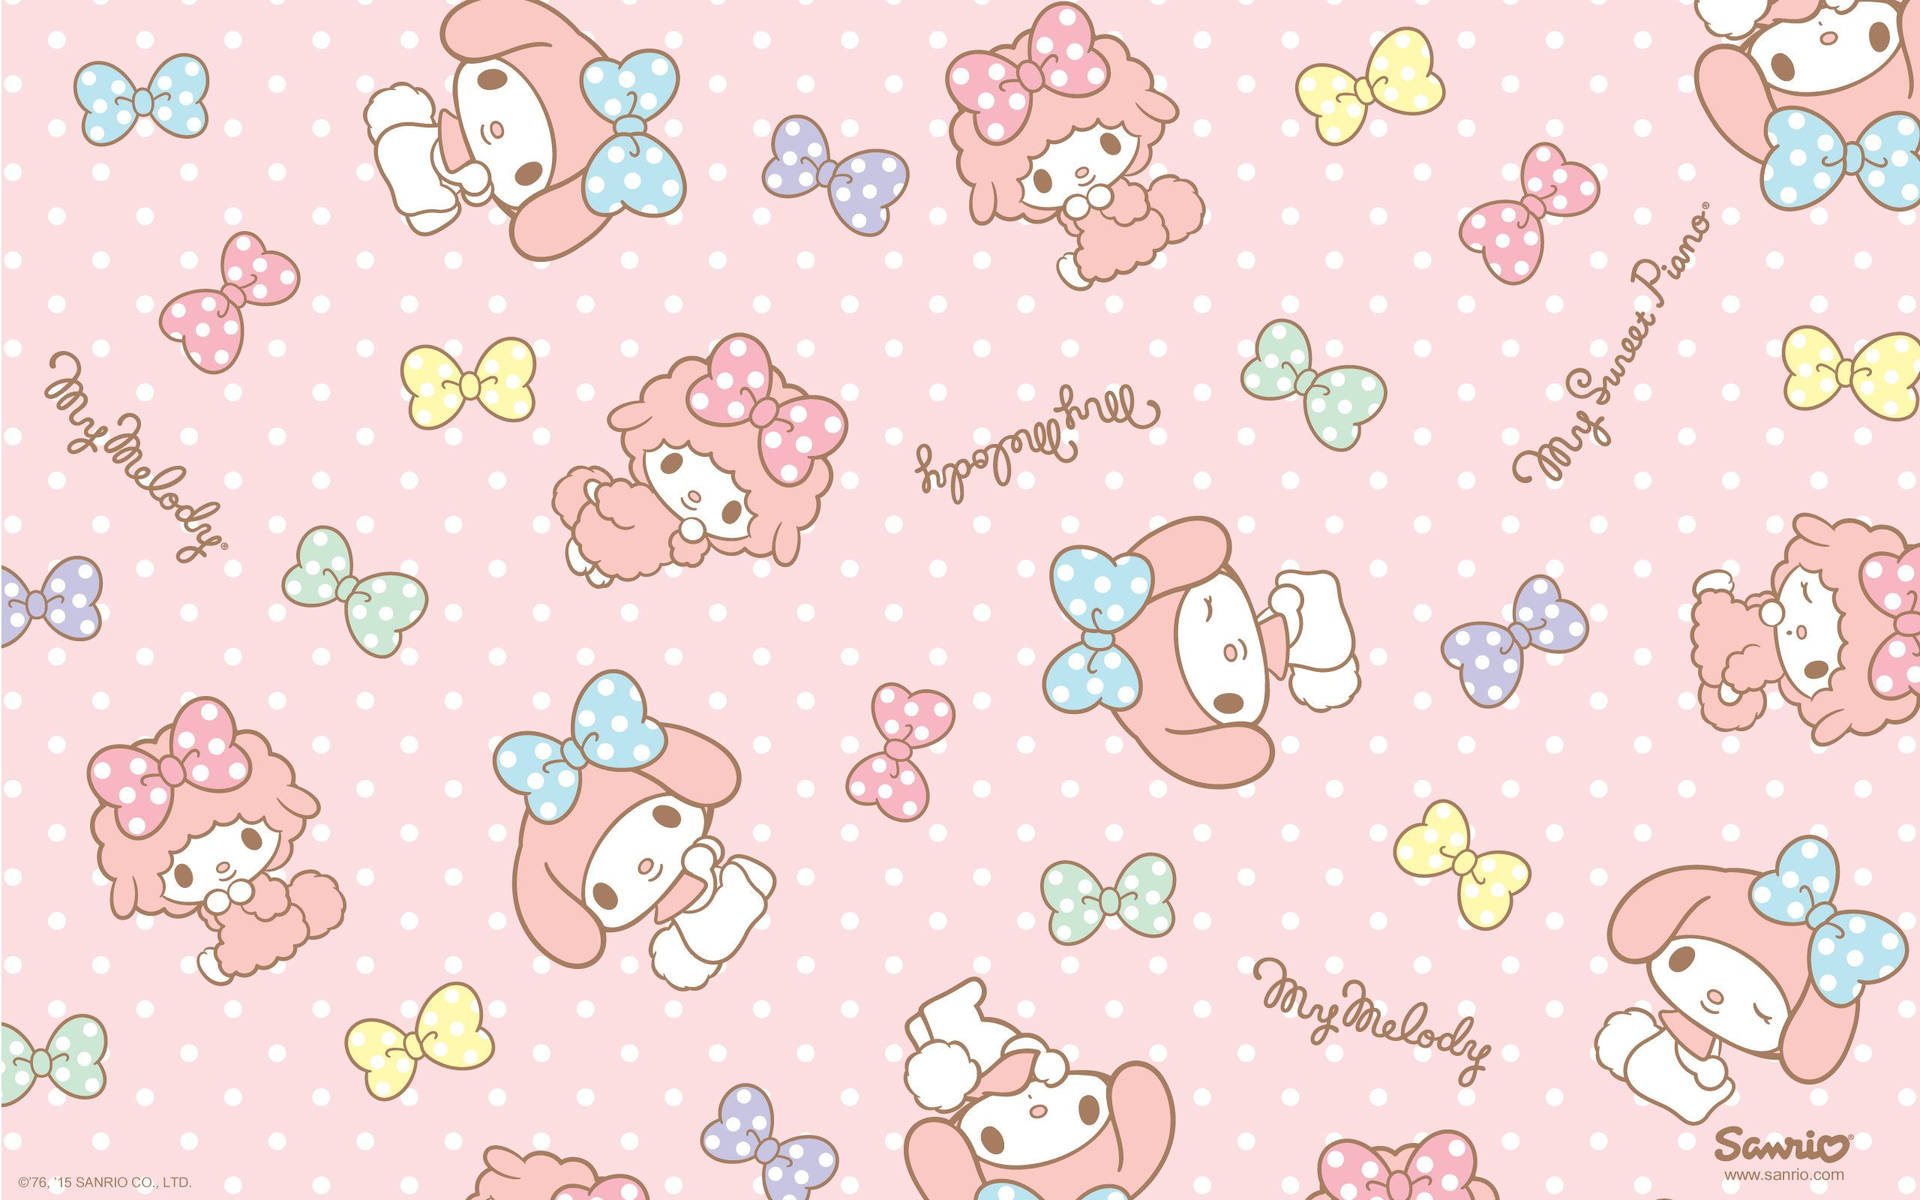 Cute Sanrio Wallpaper